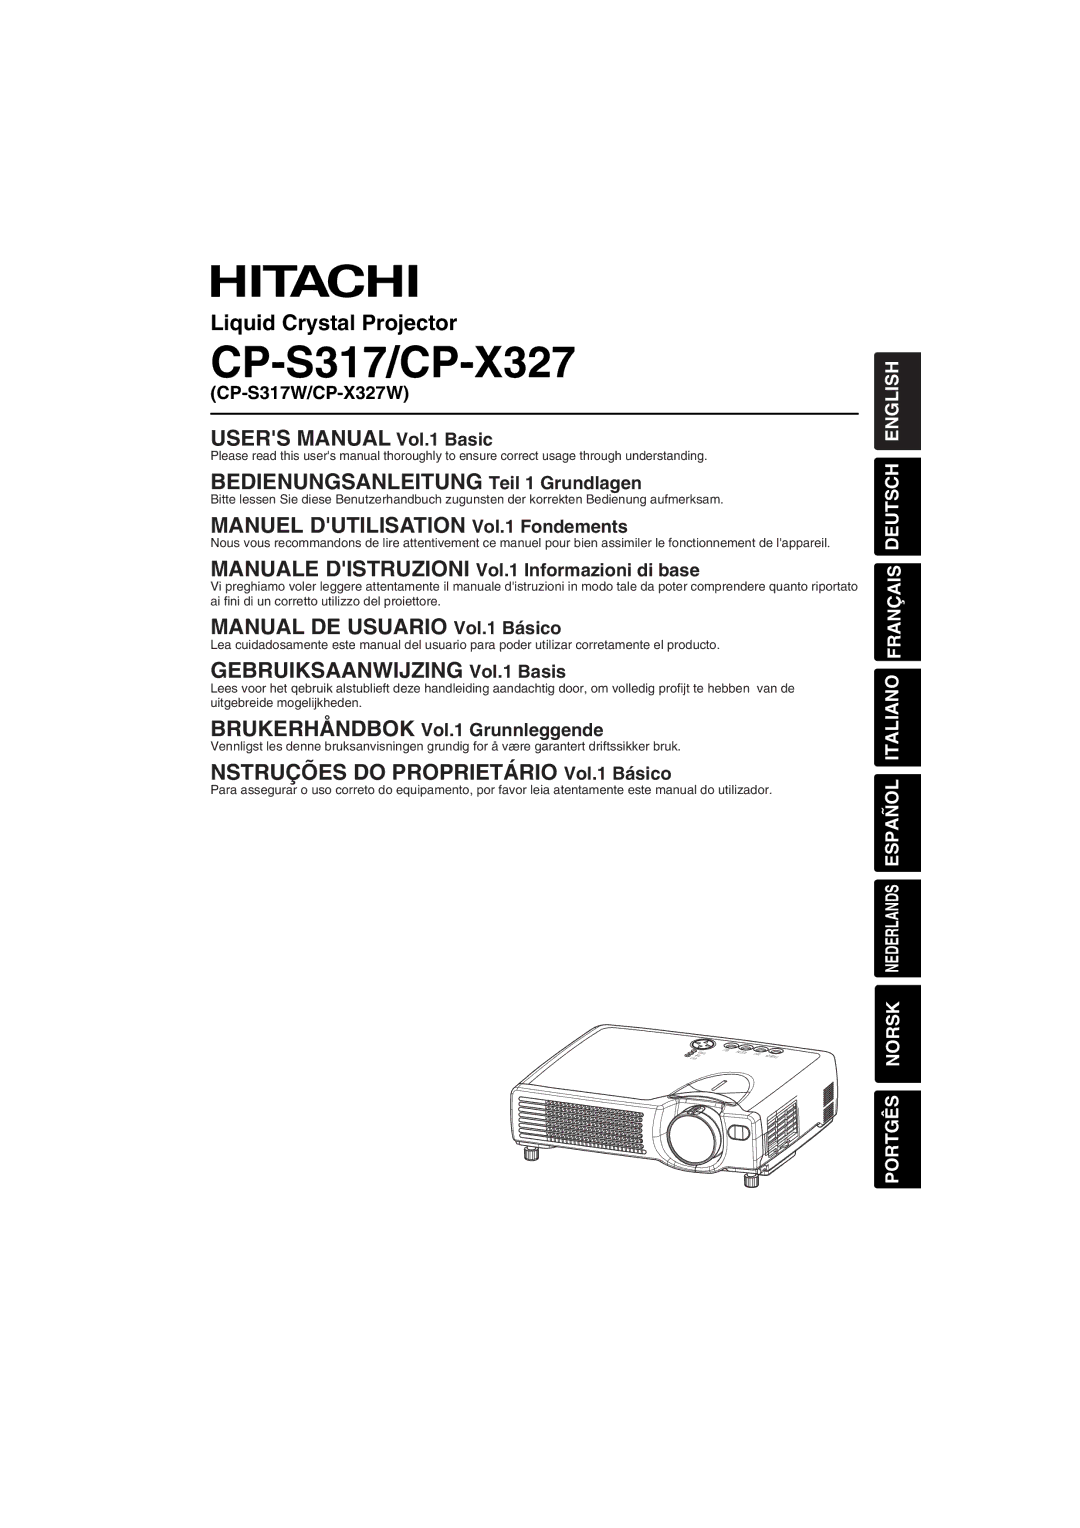 Hitachi user manual CP-S317W/CP-X327W, Manuale Distruzioni Vol.1 Informazioni di base 